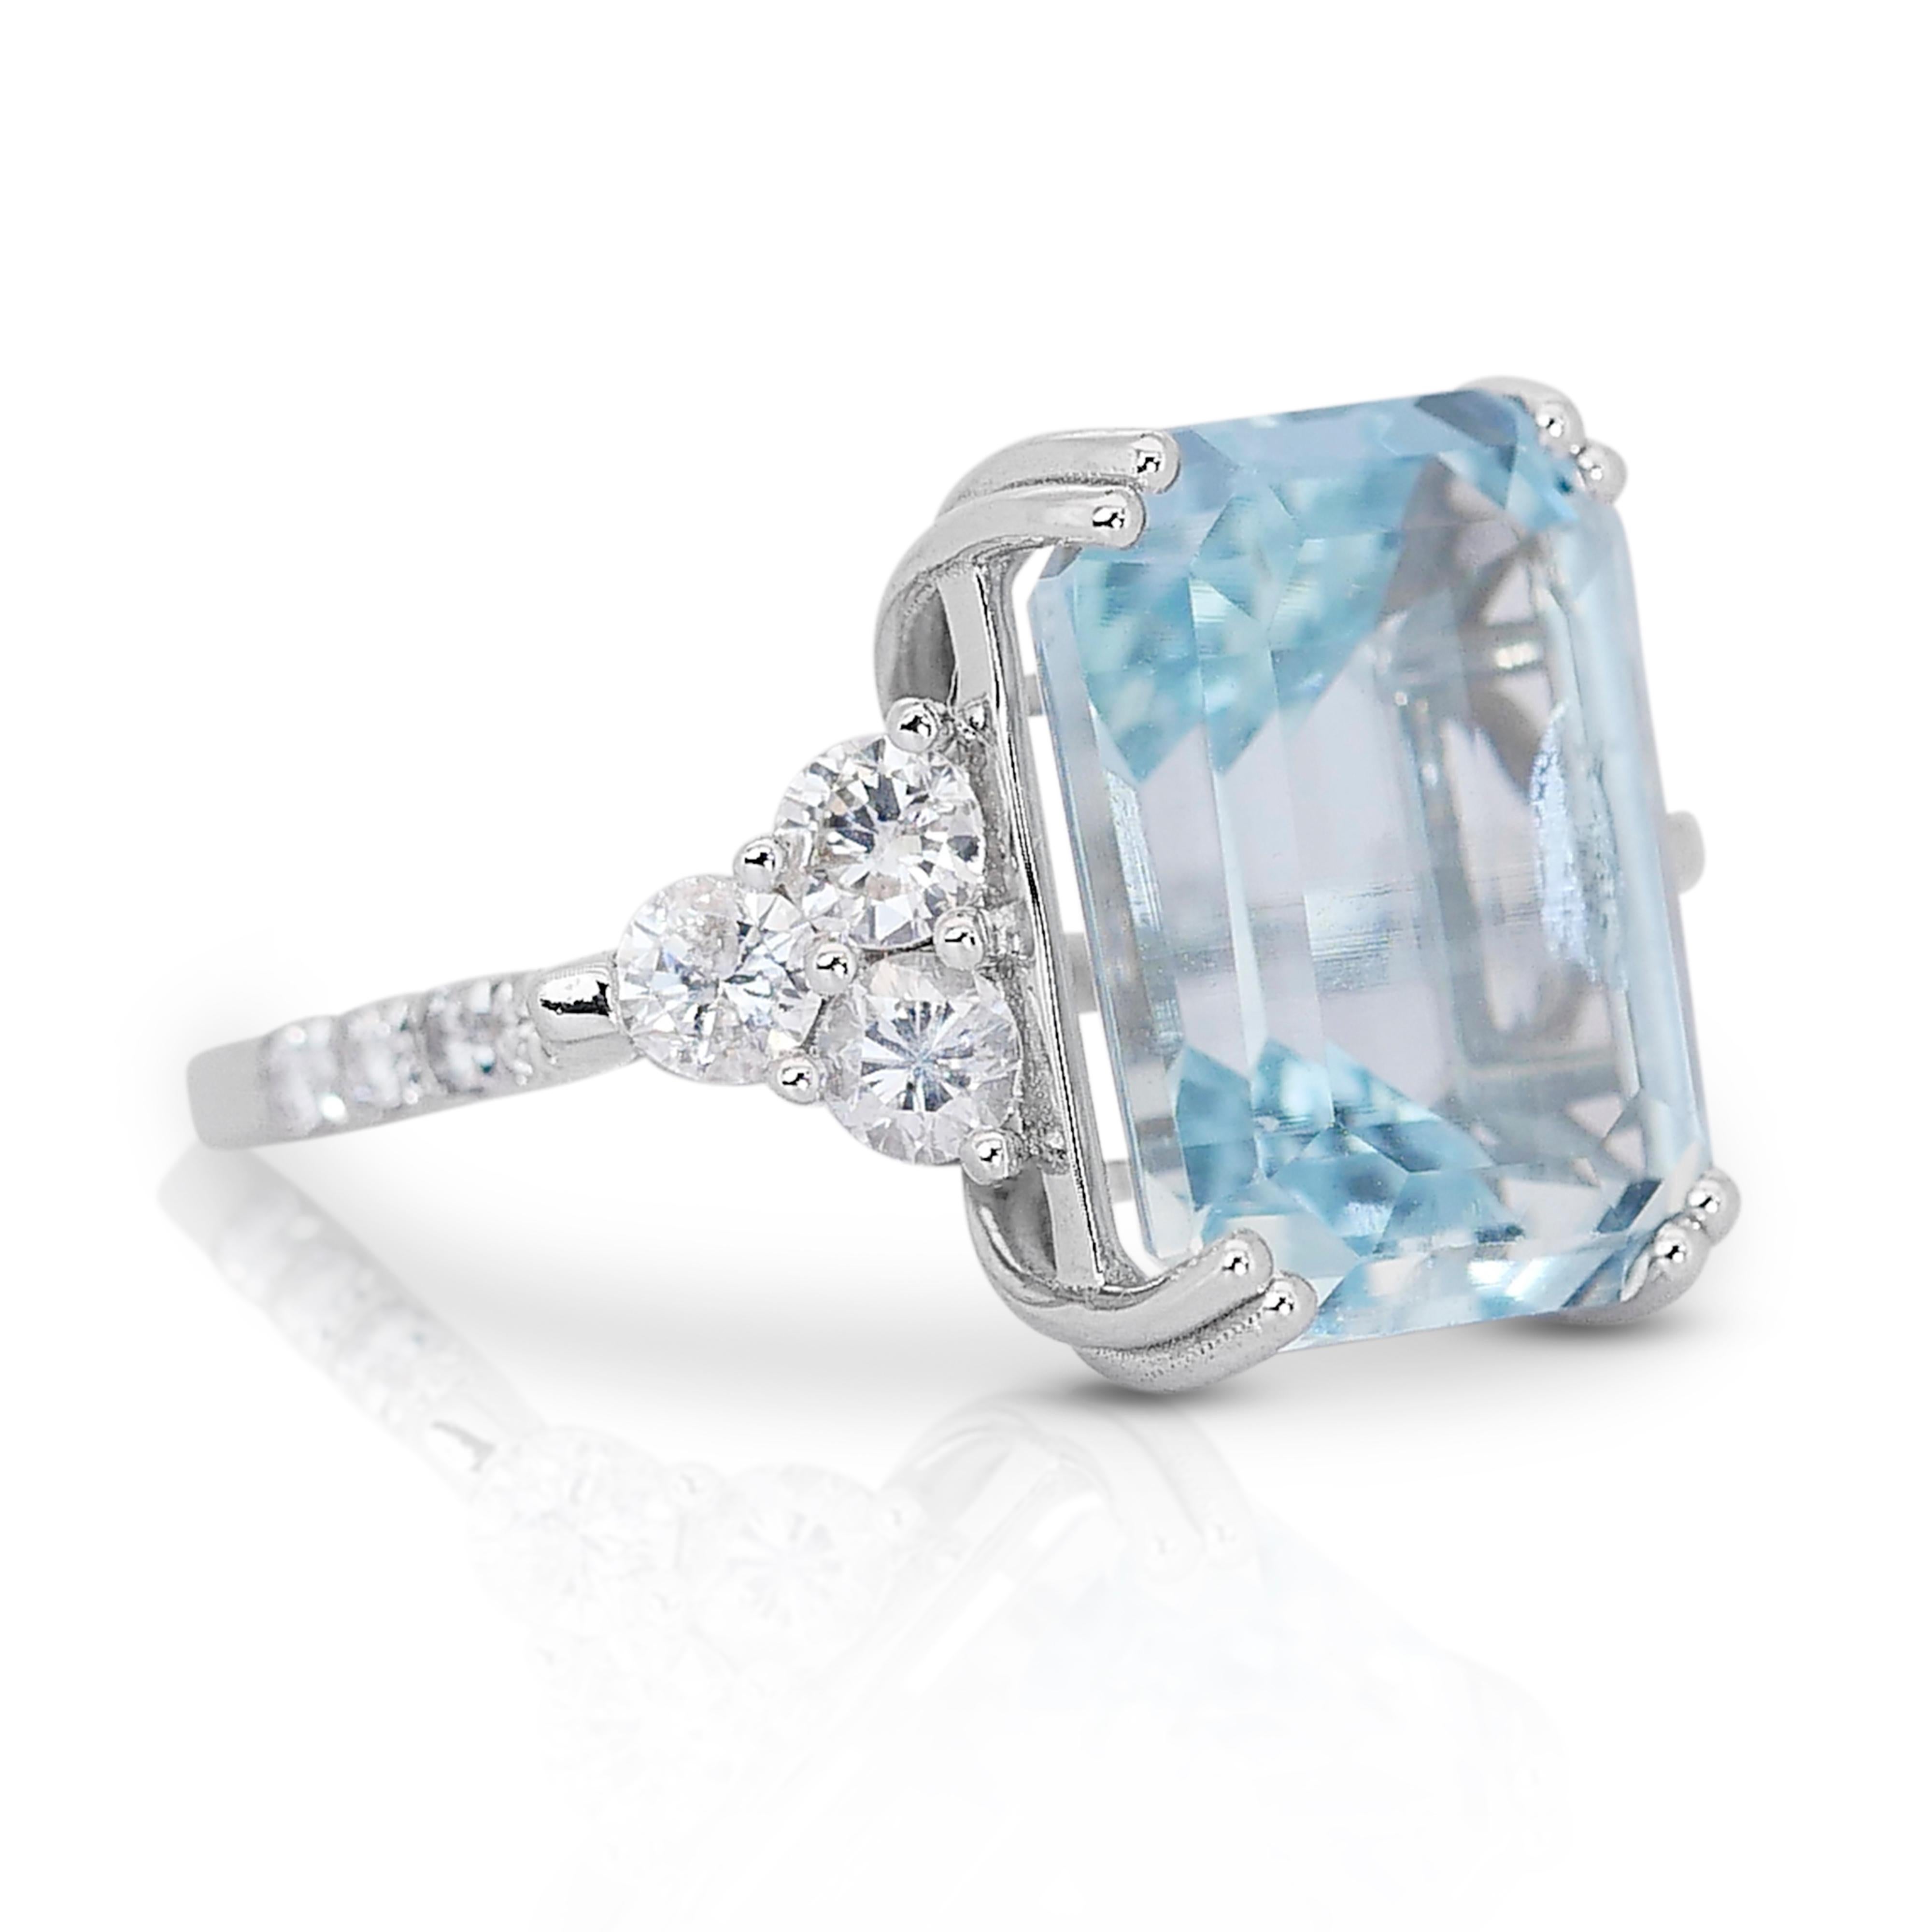 Women's Enchanting 8.80 Carat Emerald Cut Aquamarine Ring in 14K White Gold